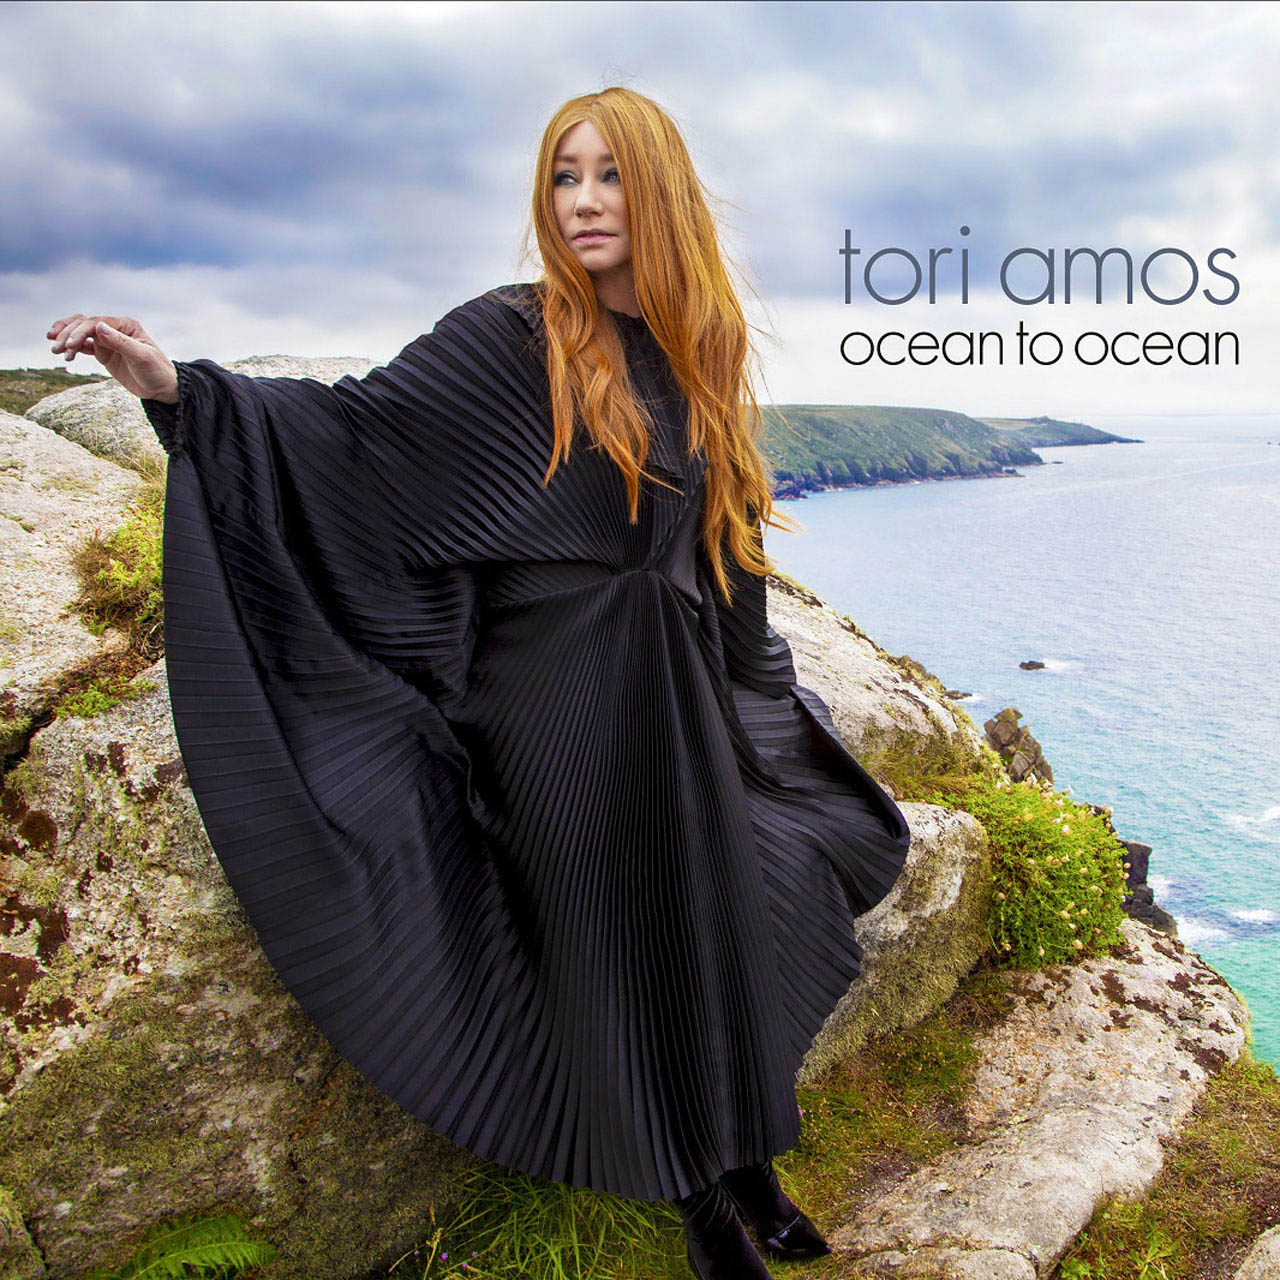 Tori Amos - Ocean to Ocean | Album Review